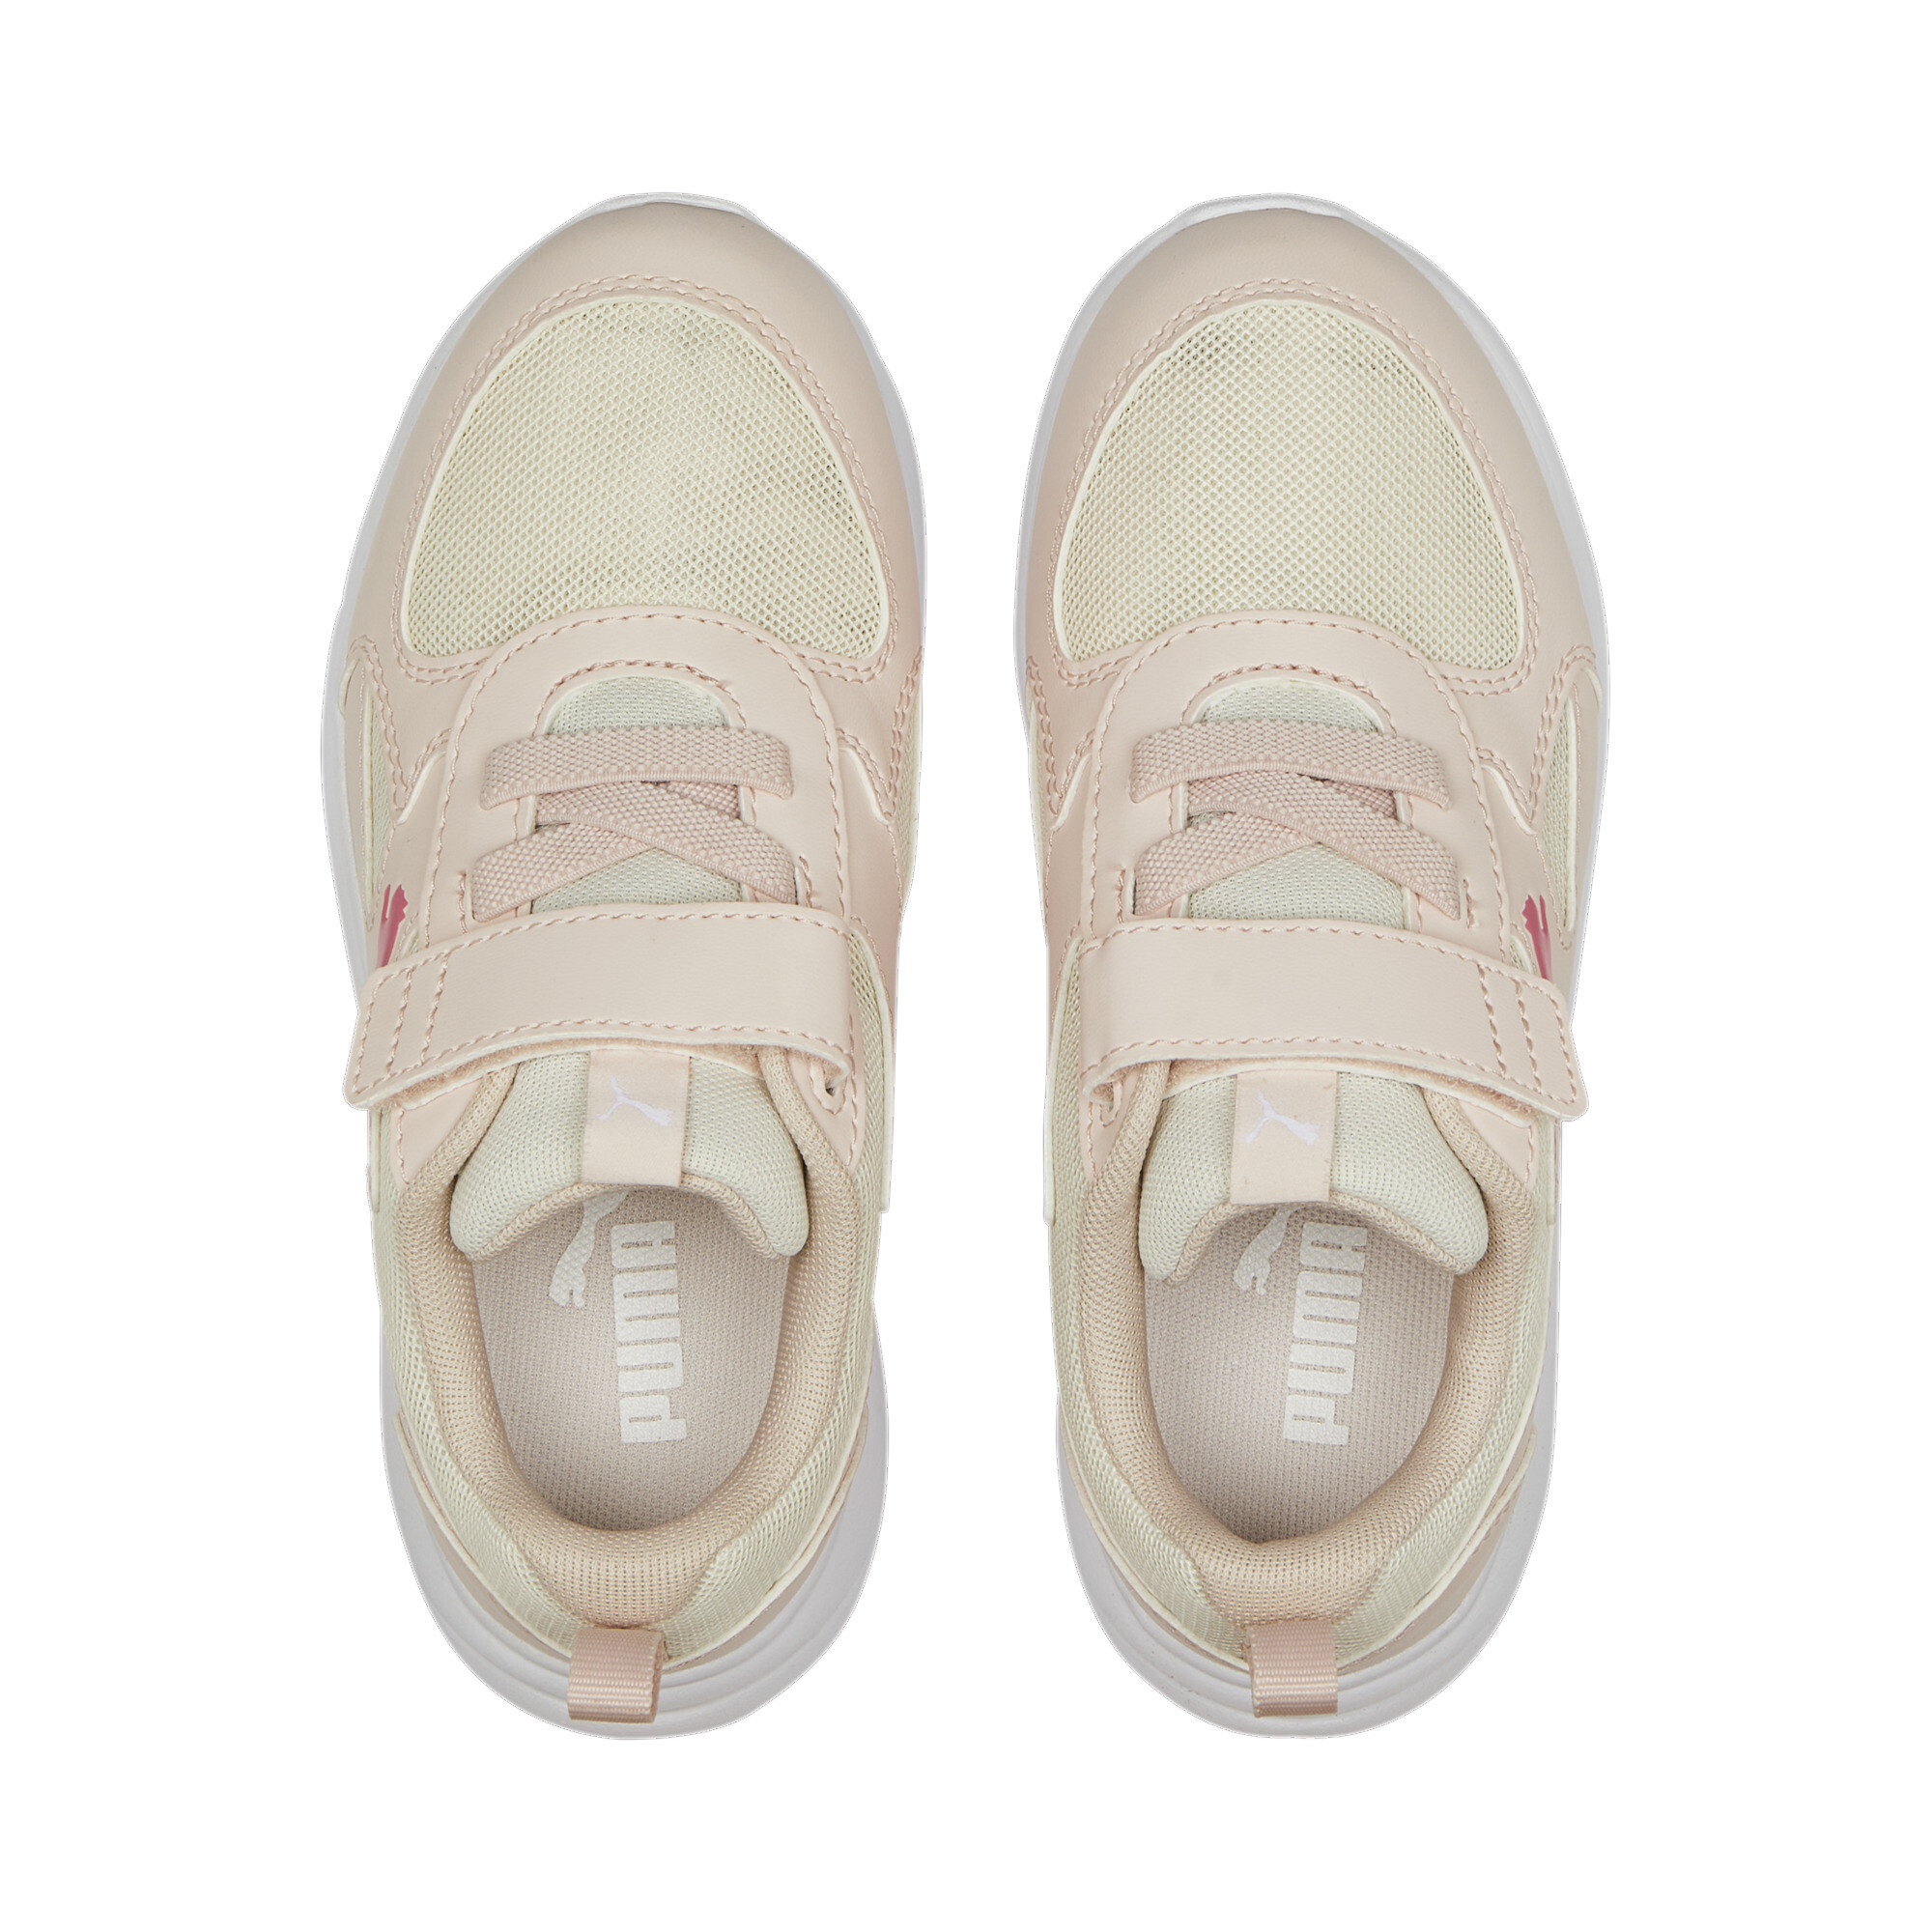 Kids' PUMA Fun Racer Sneakers In White/Pink, Size EU 27.5